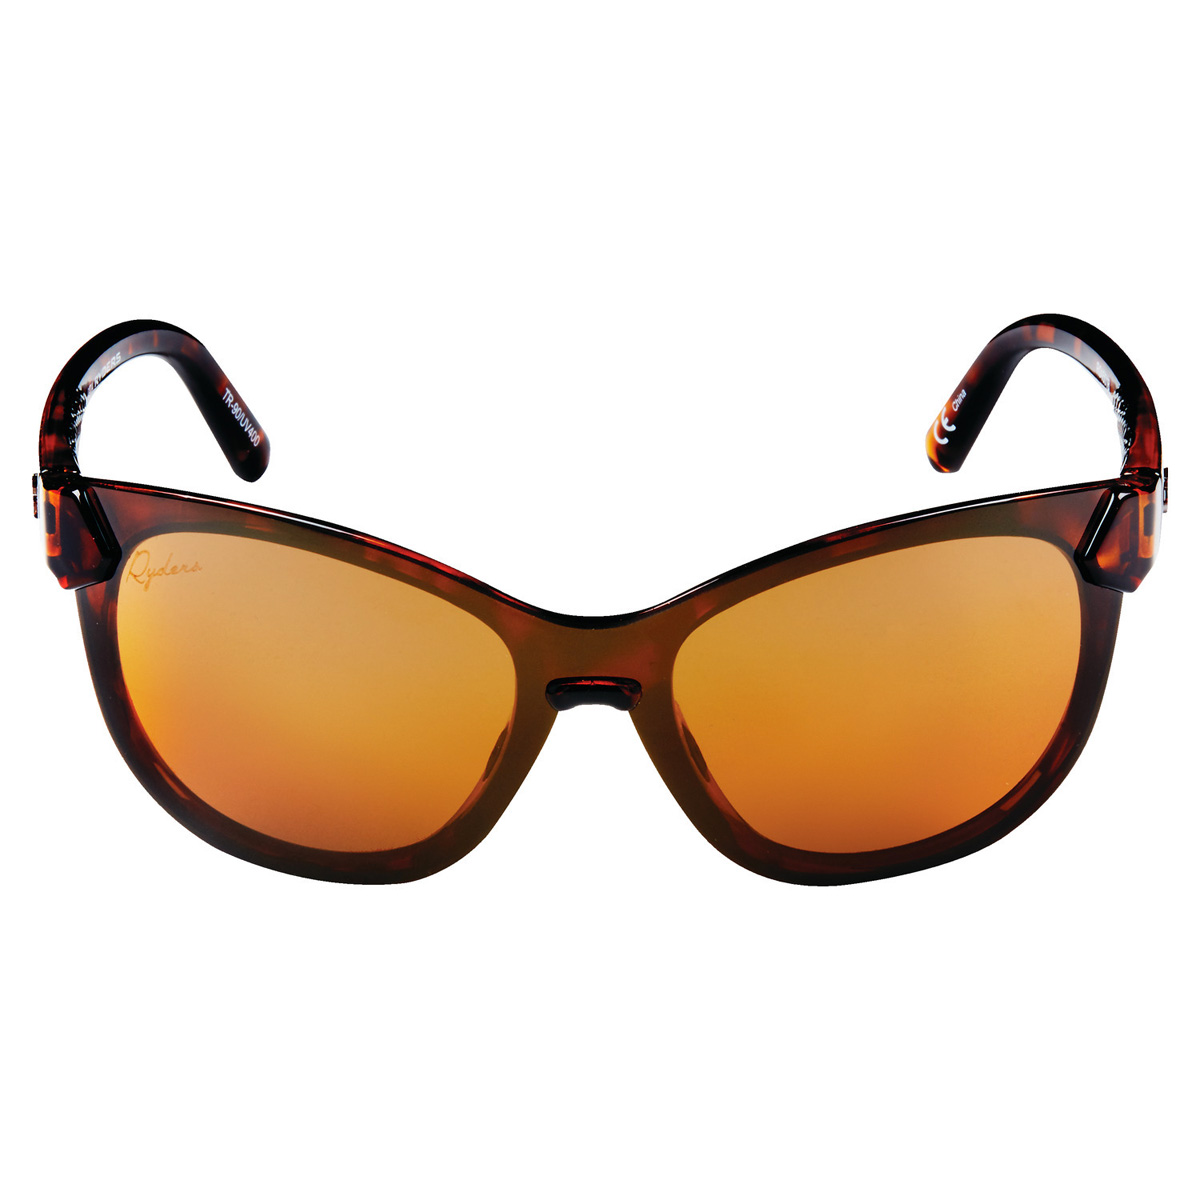 Ryders Eyewear Catja Standard Sunglasses (DEMI / BROWN LENS GOLD FM ) - image 1 of 1